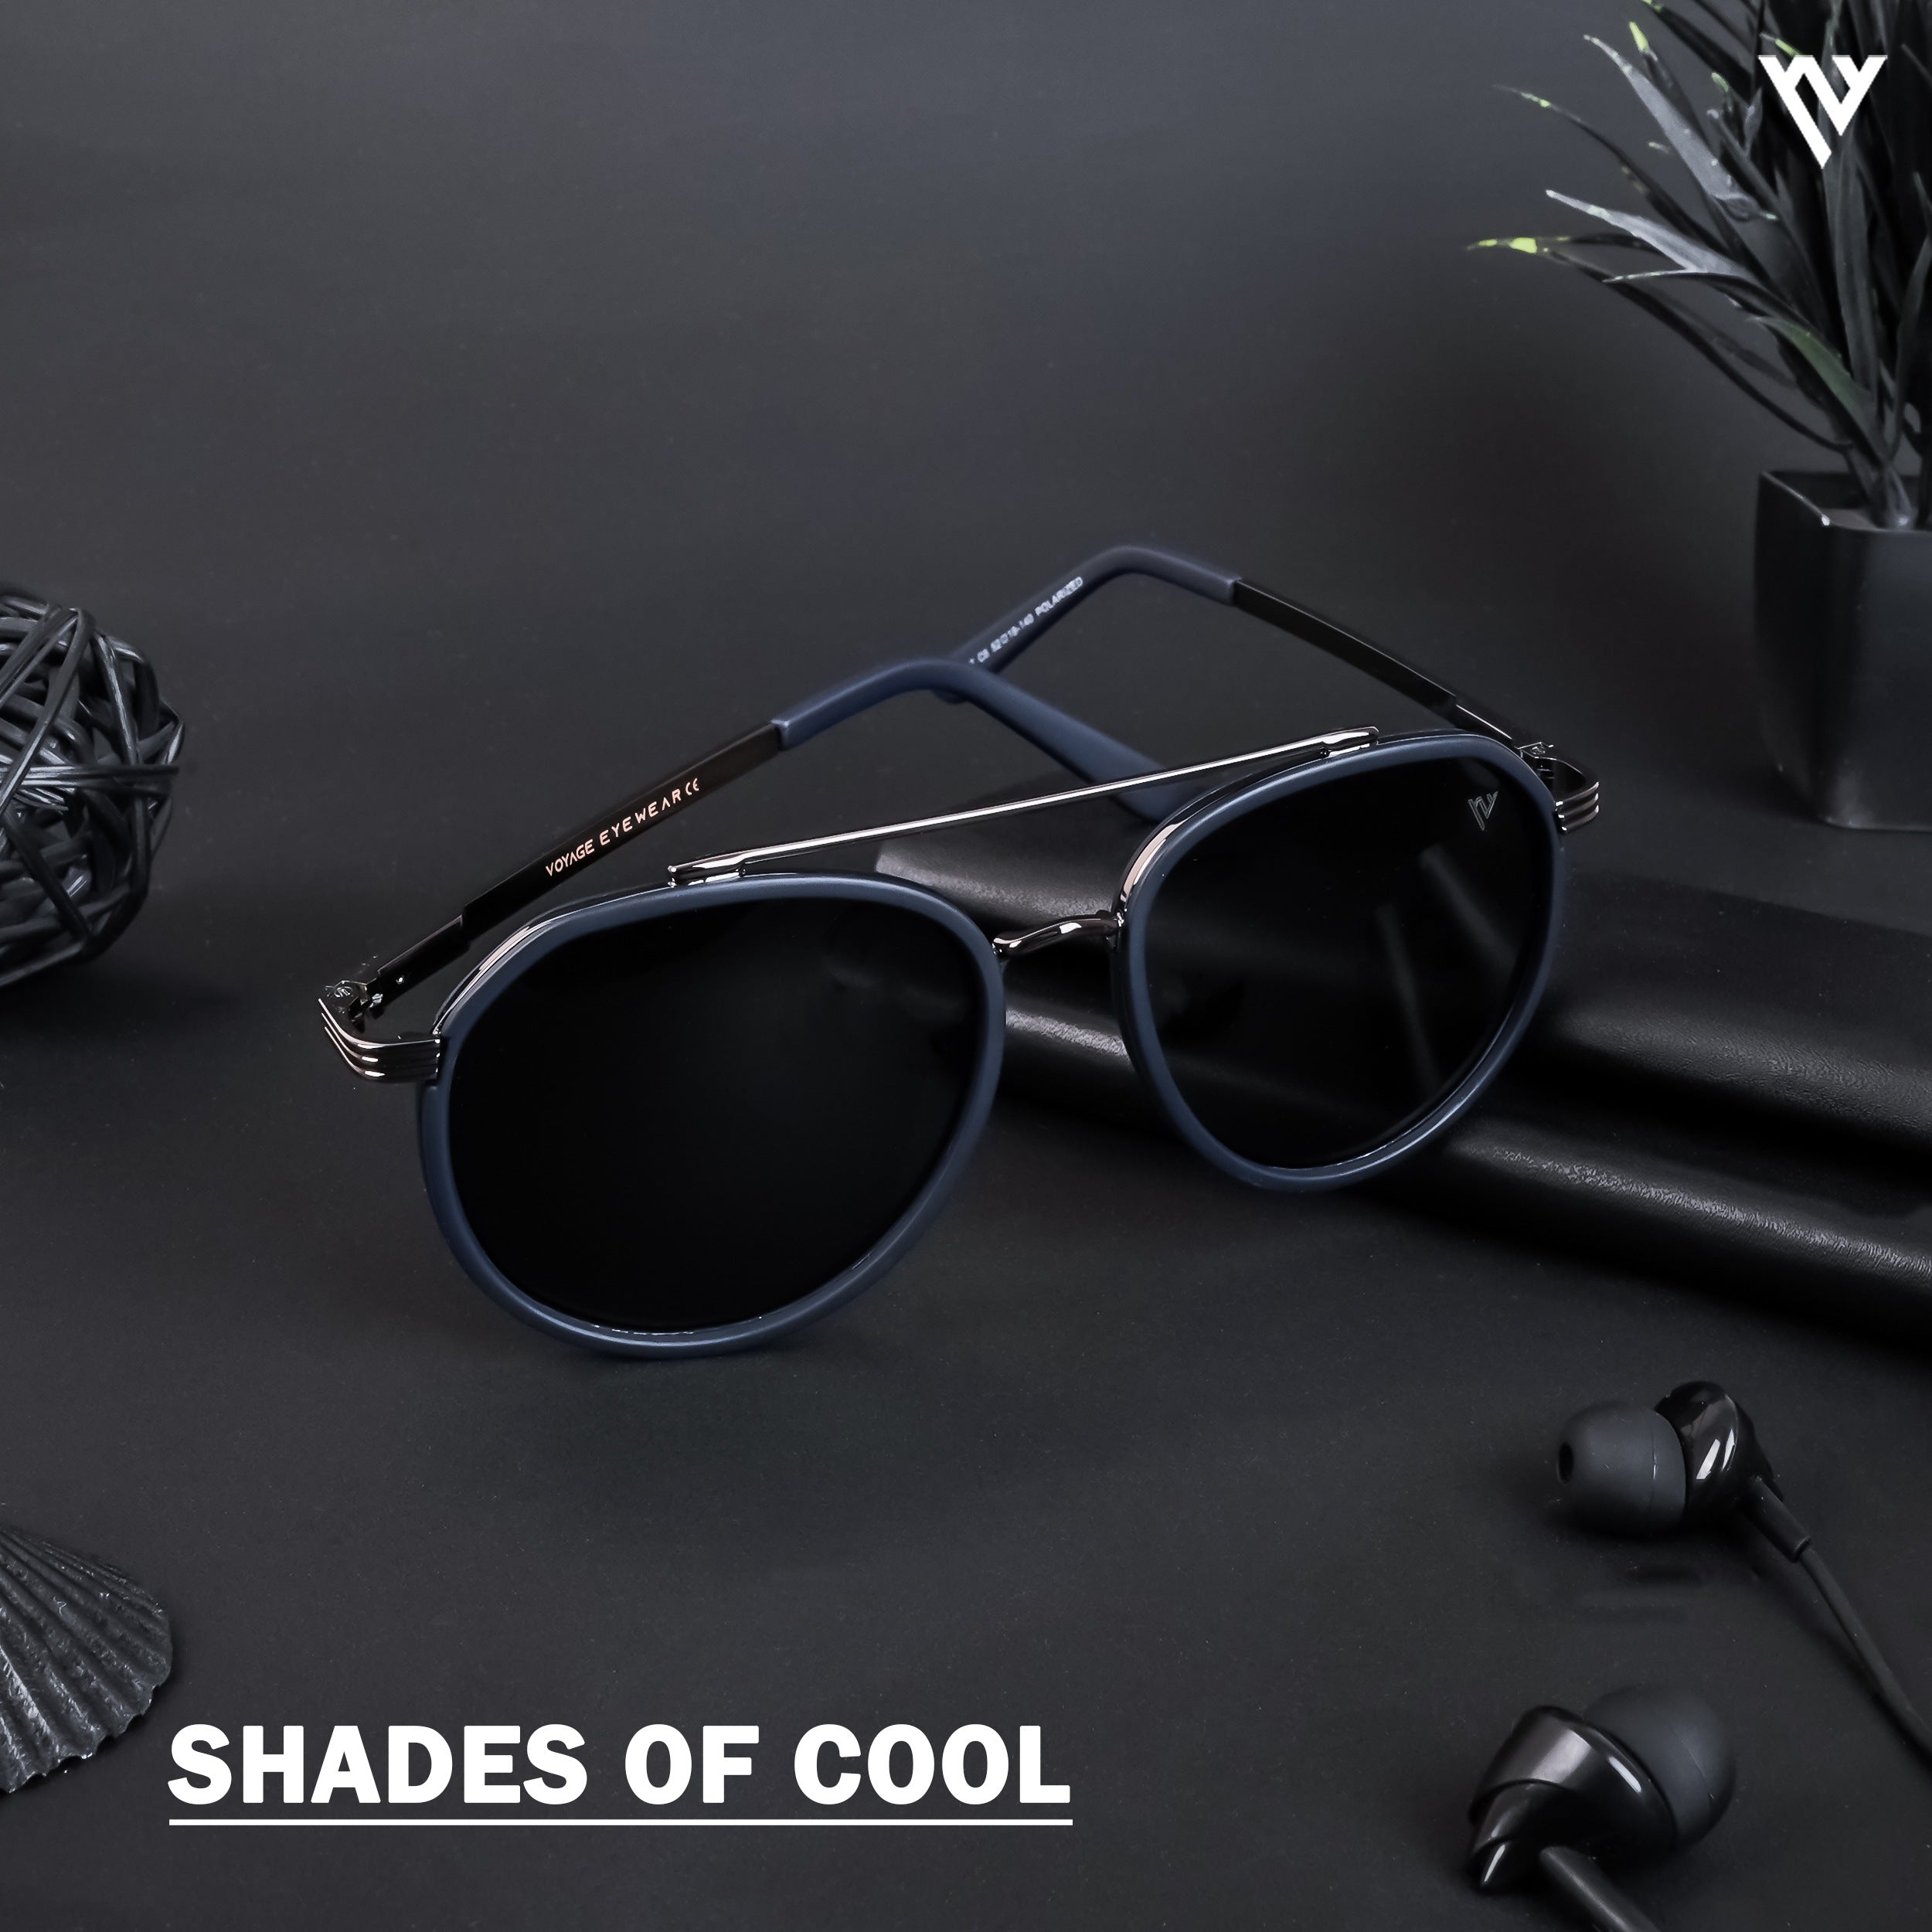 Voyage Exclusive Grey & Navy Blue Polarized Round Sunglasses for Men & Women - PMG4312